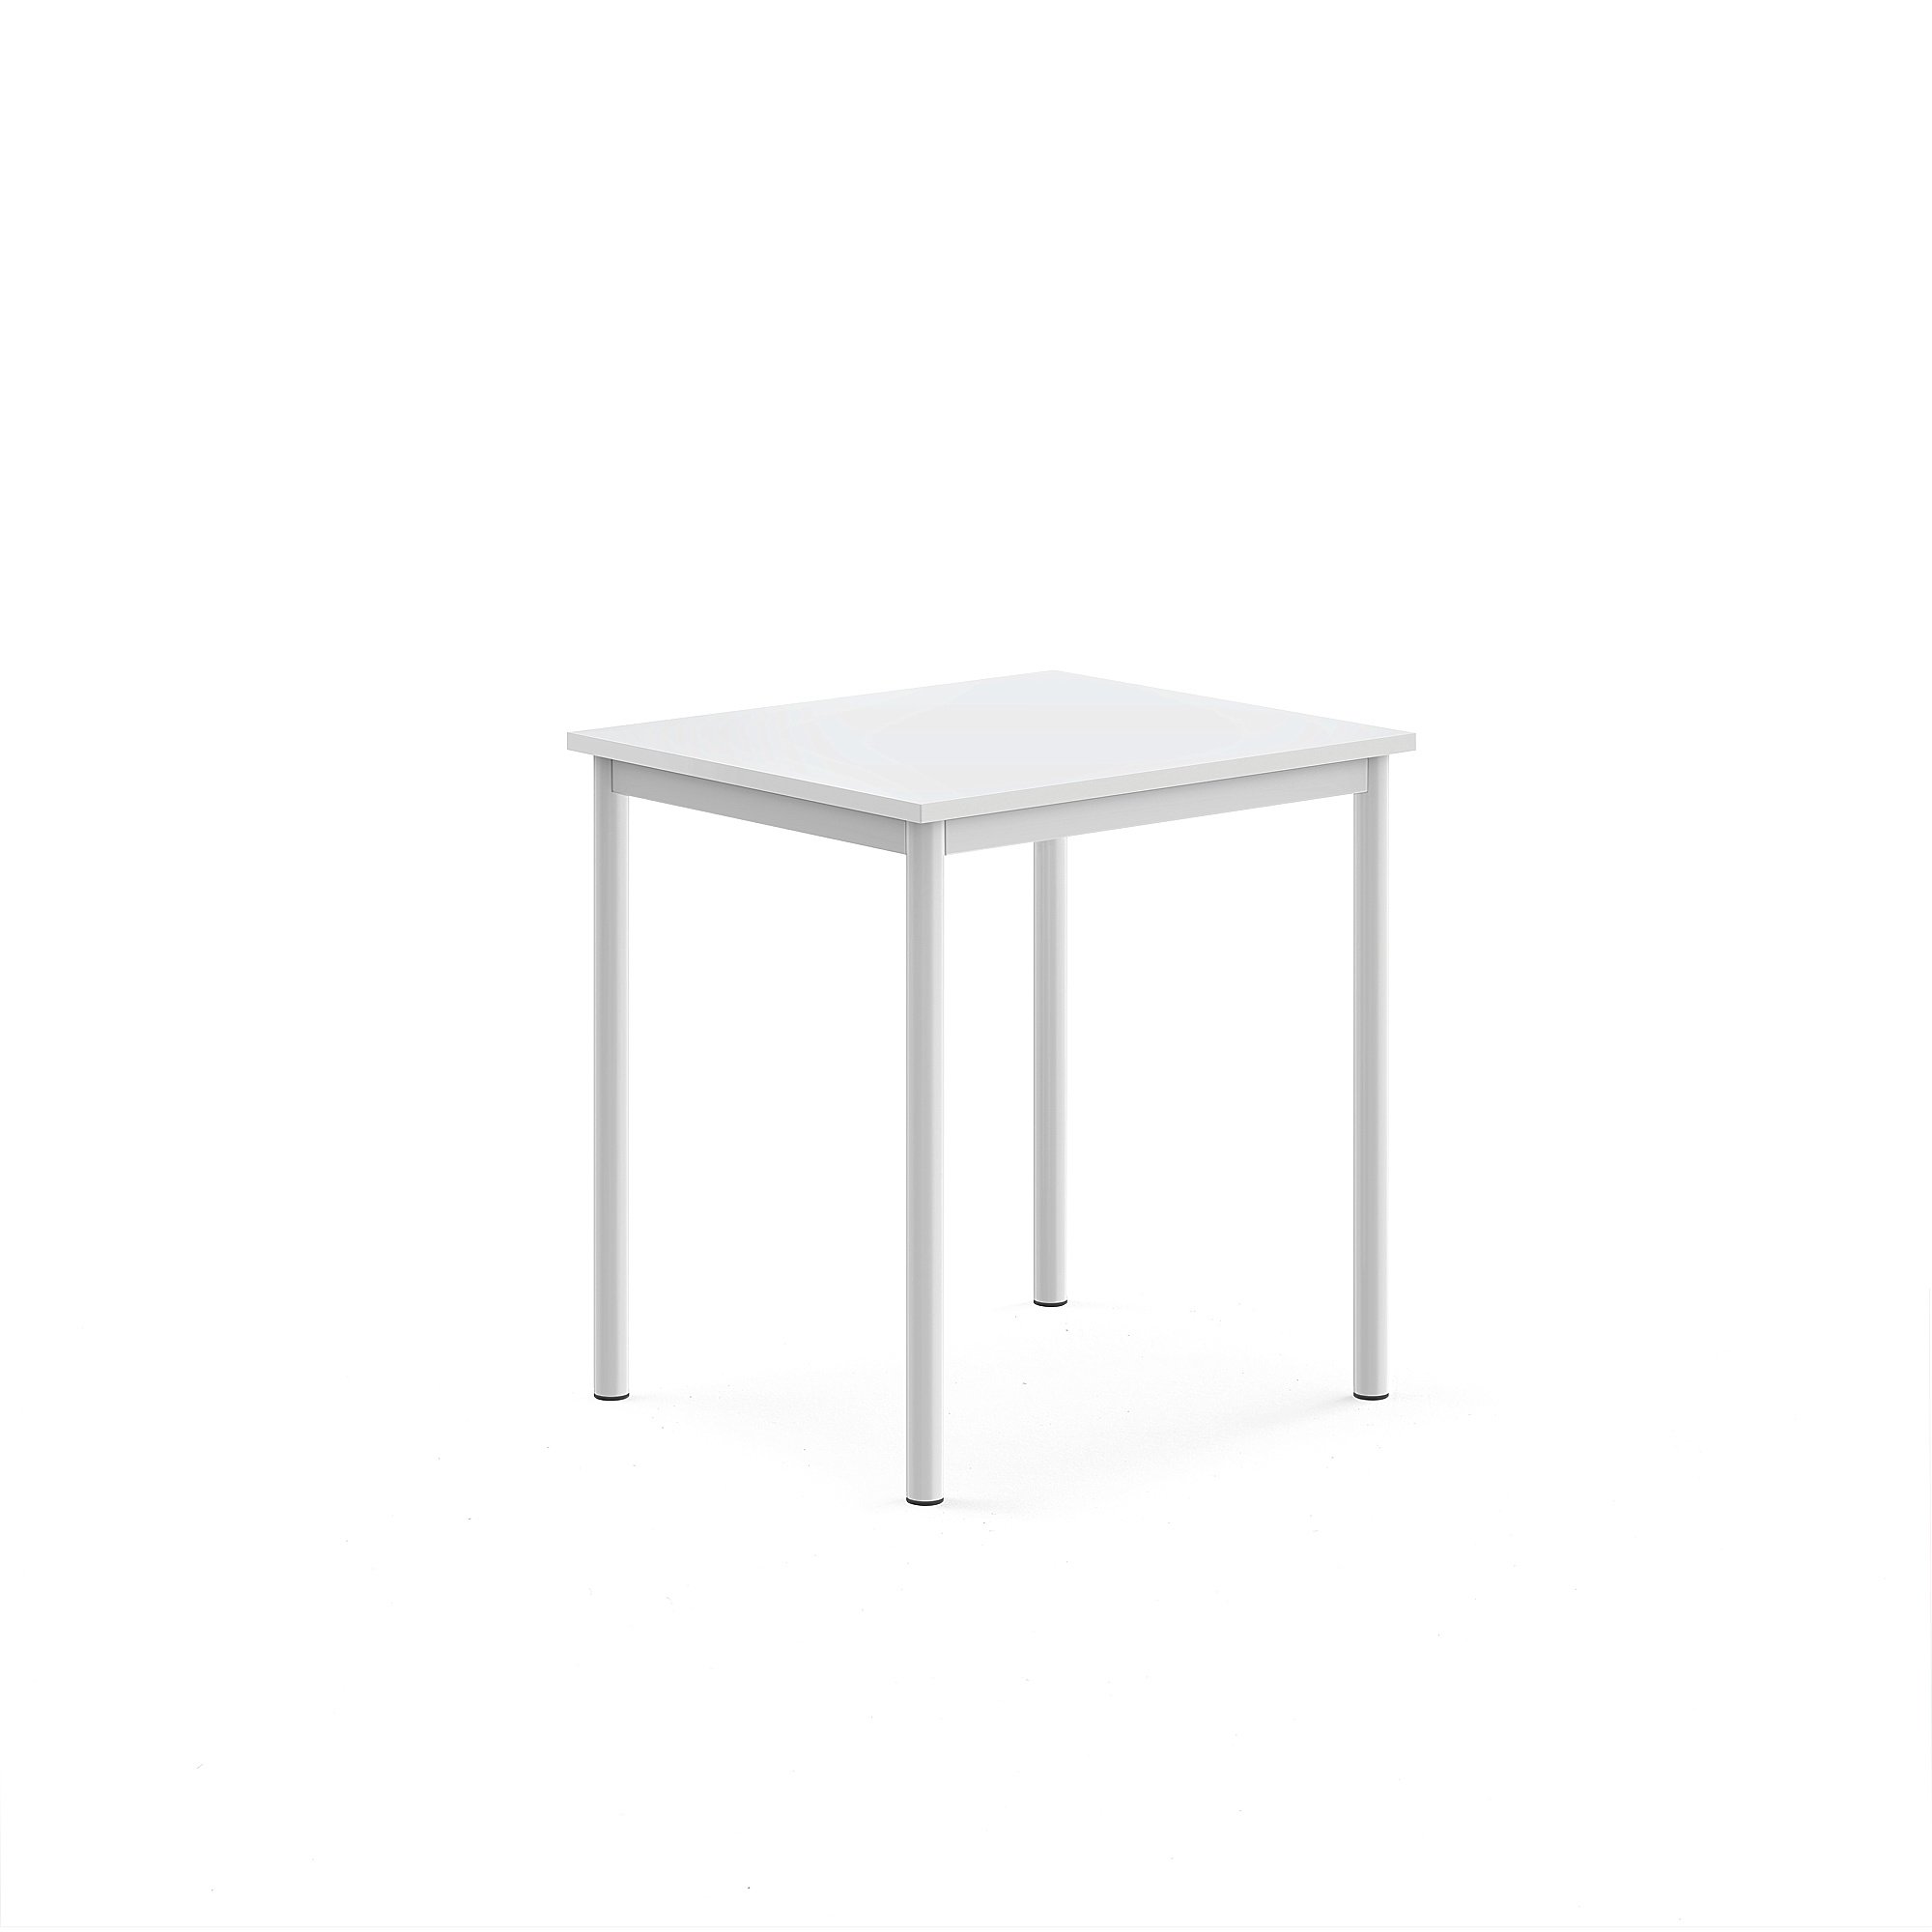 Stůl SONITUS, 700x600x720 mm, bílé nohy, HPL deska tlumící hluk, bílá